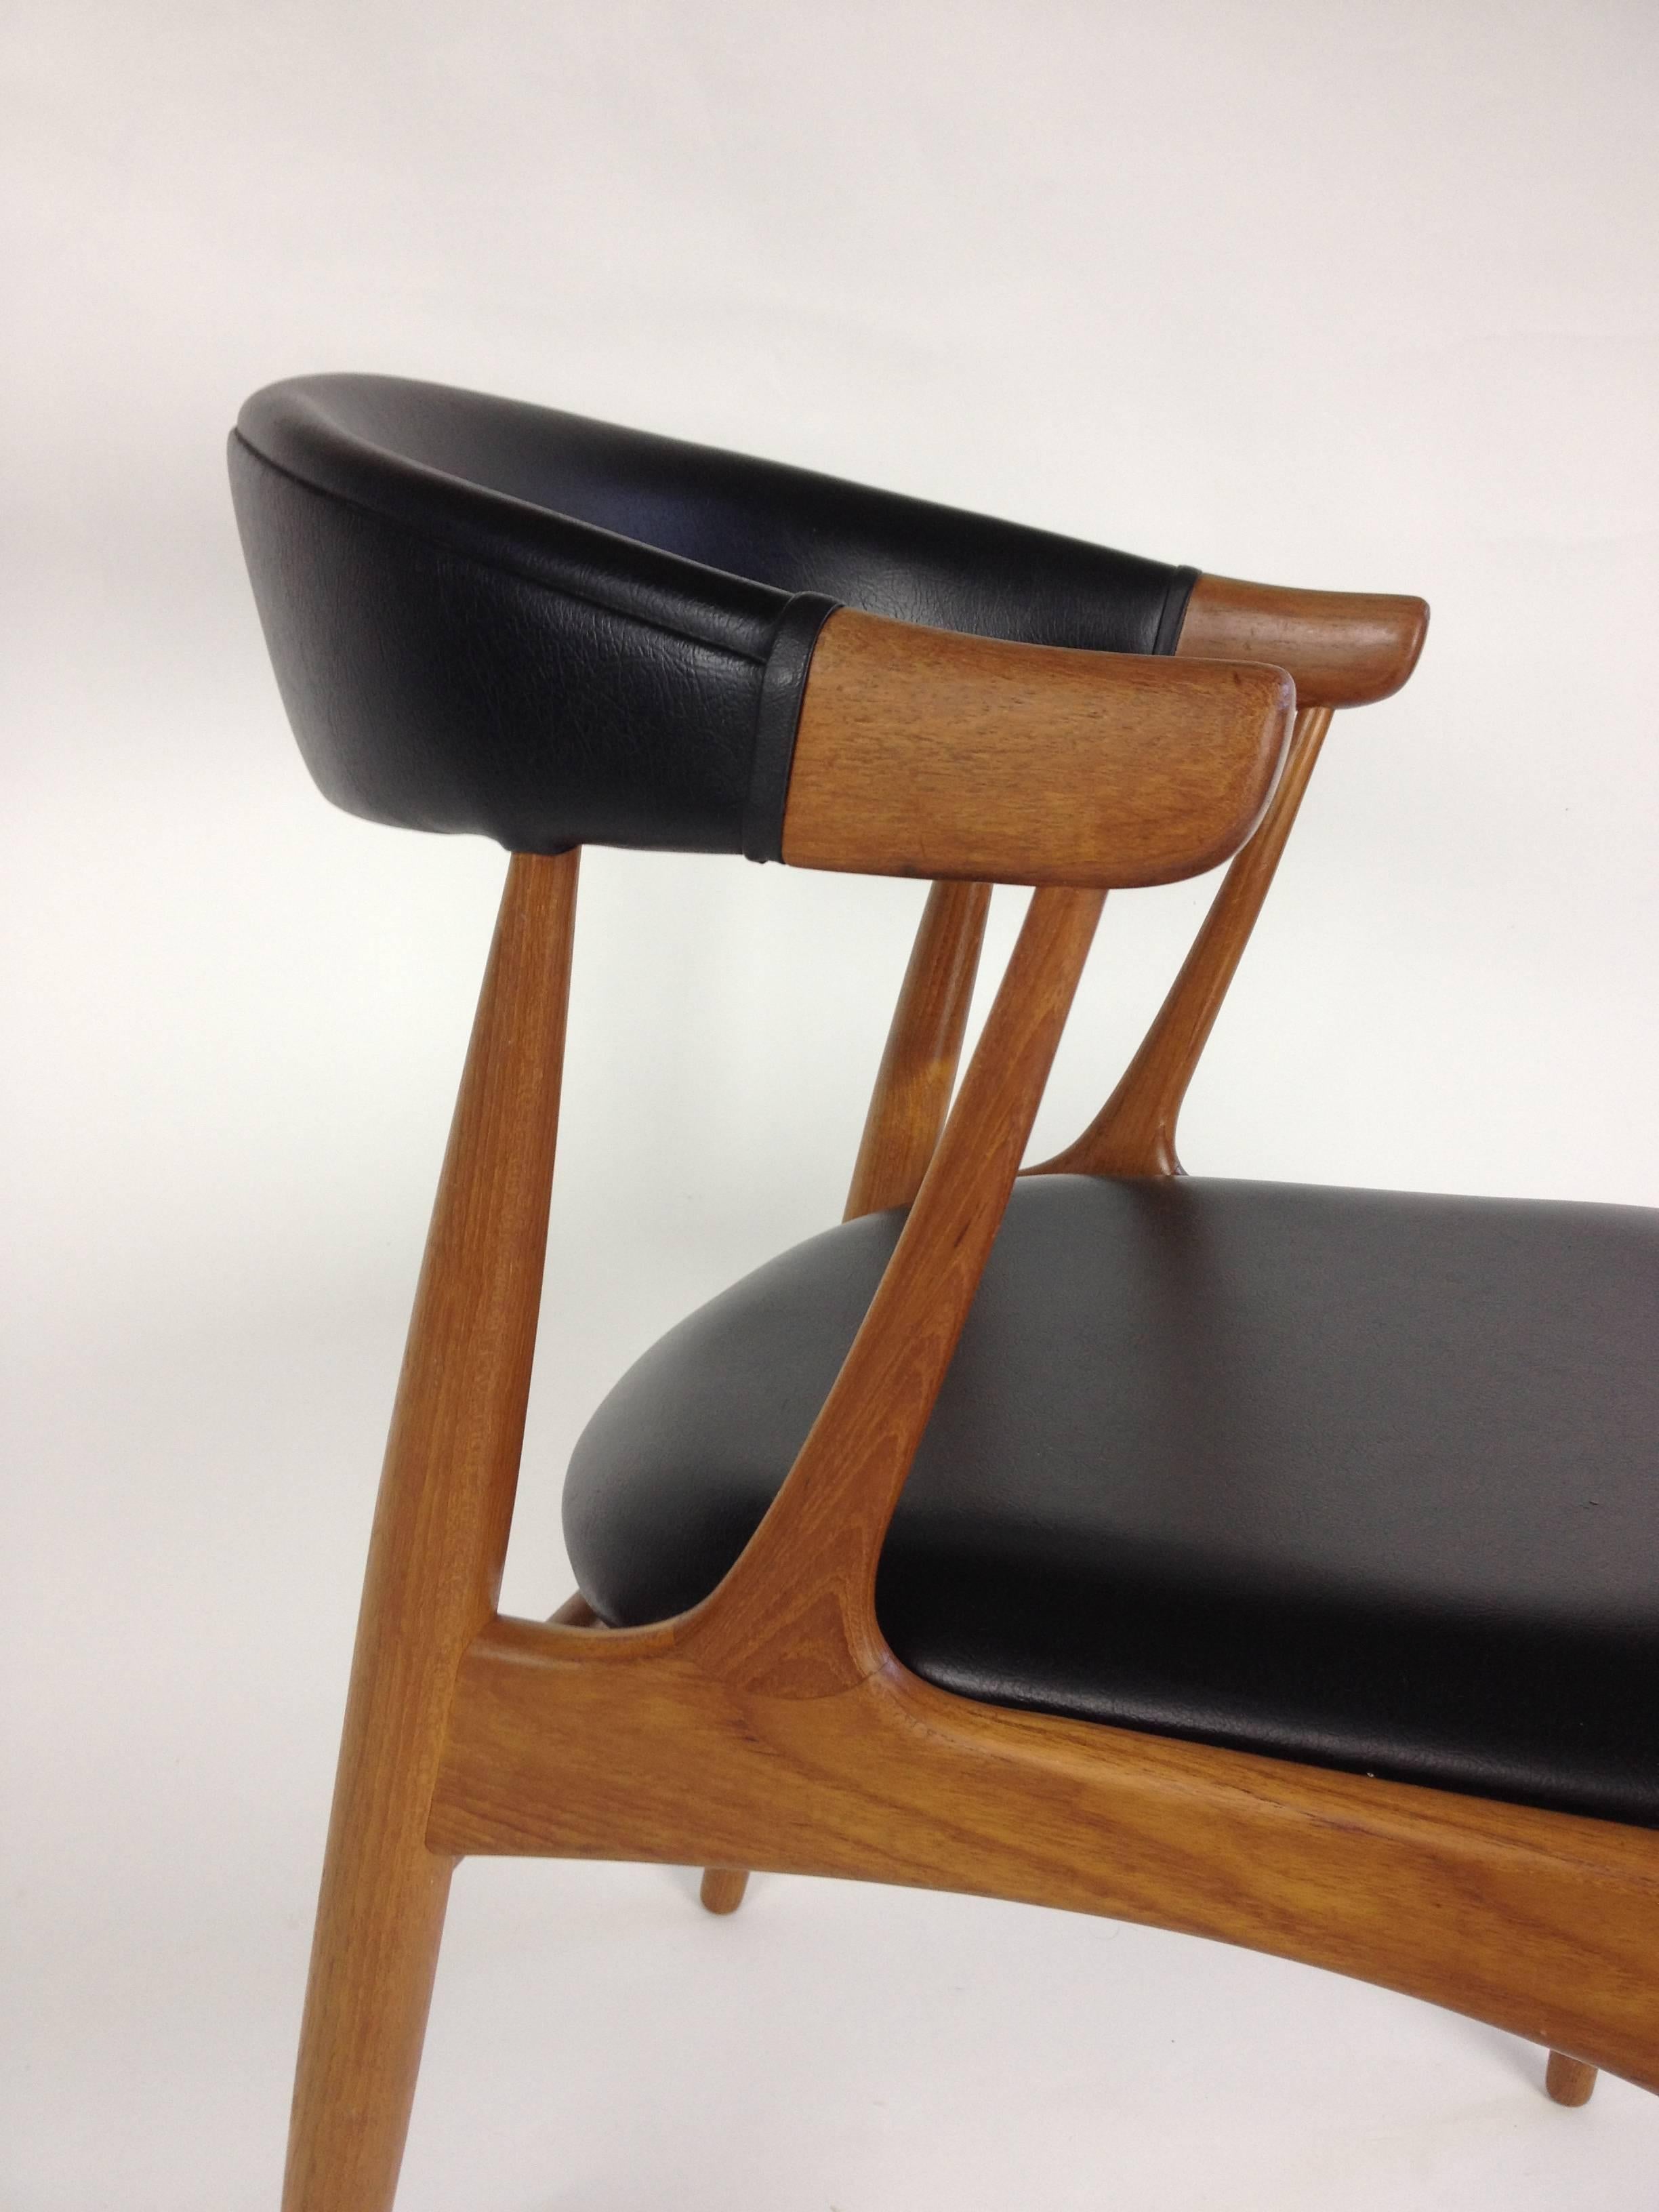 Striking Mid-Century Modern Teak Chair Designed by Johannes Andersen - Denmark For Sale 3